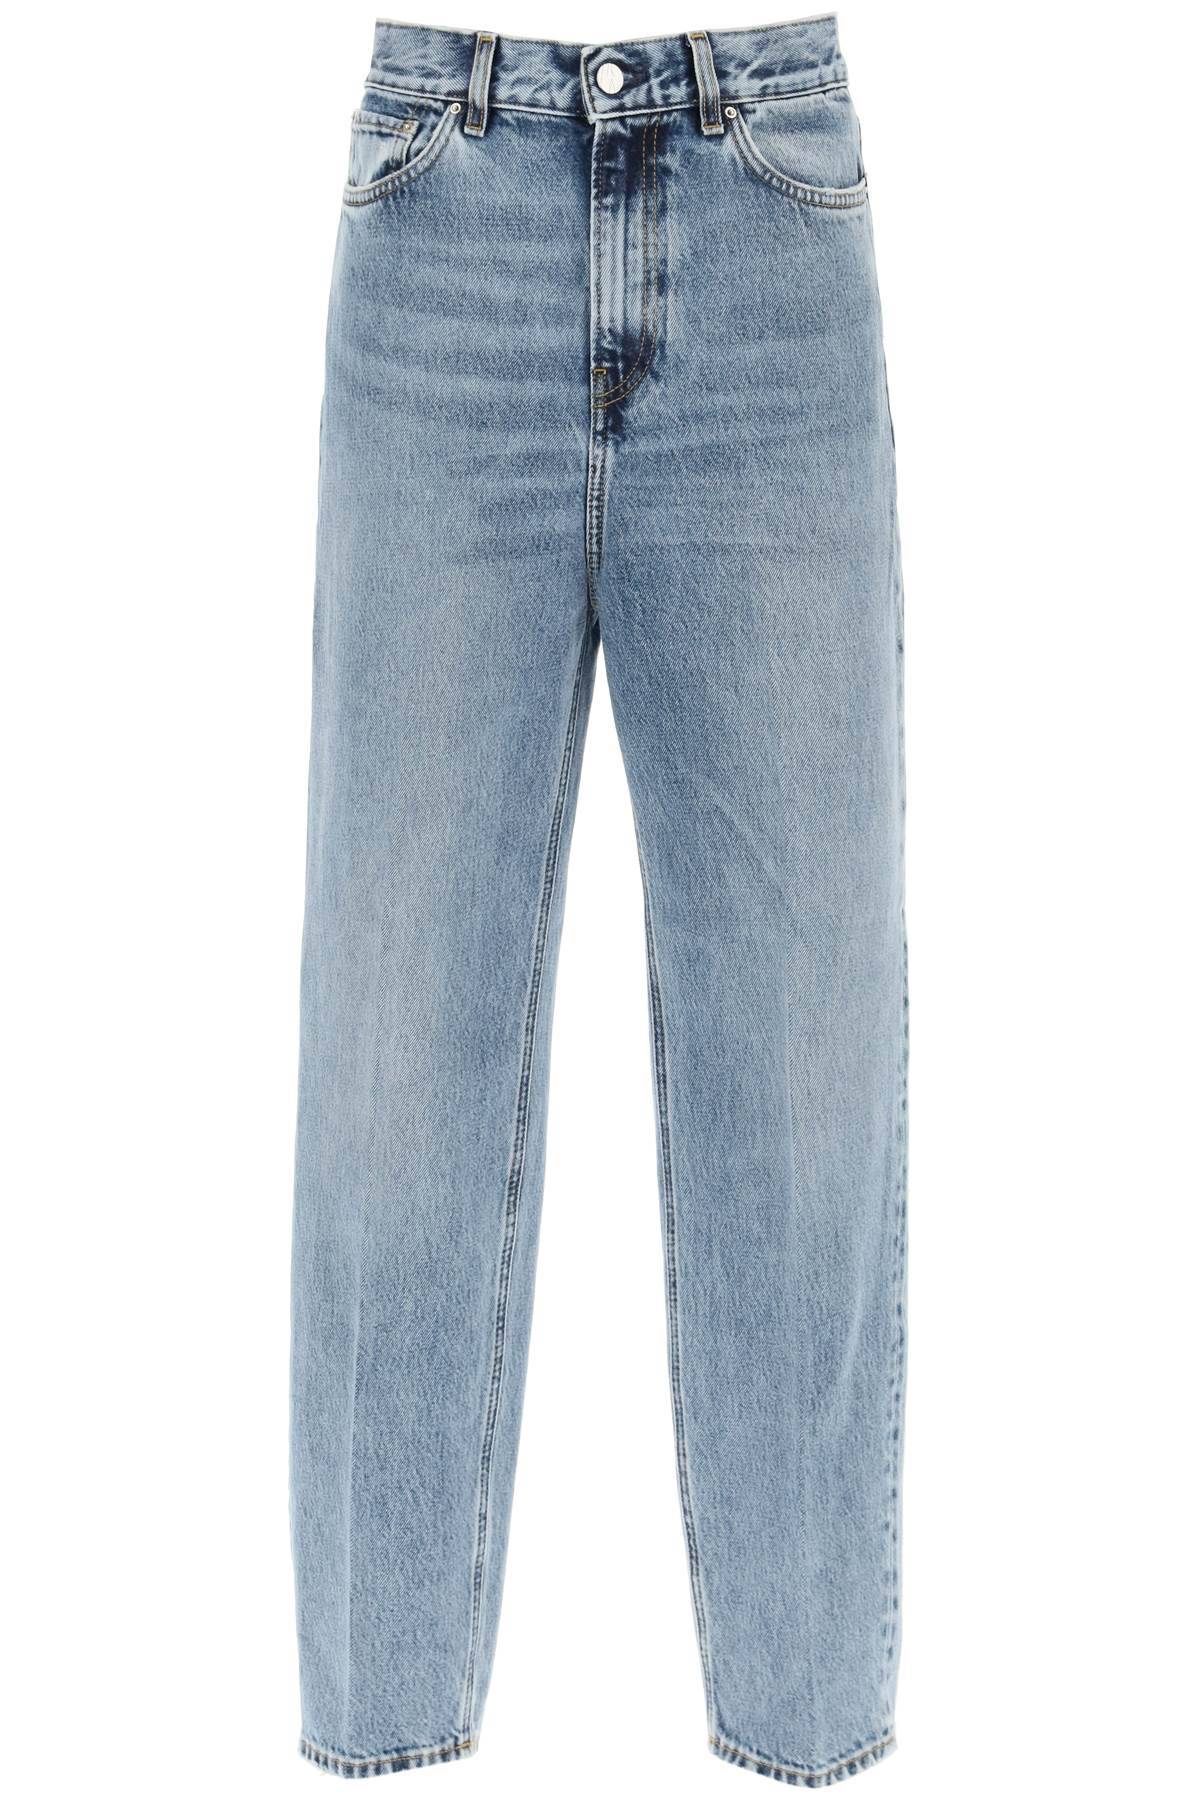 Toteme TOTEME organic denim tapered jeans